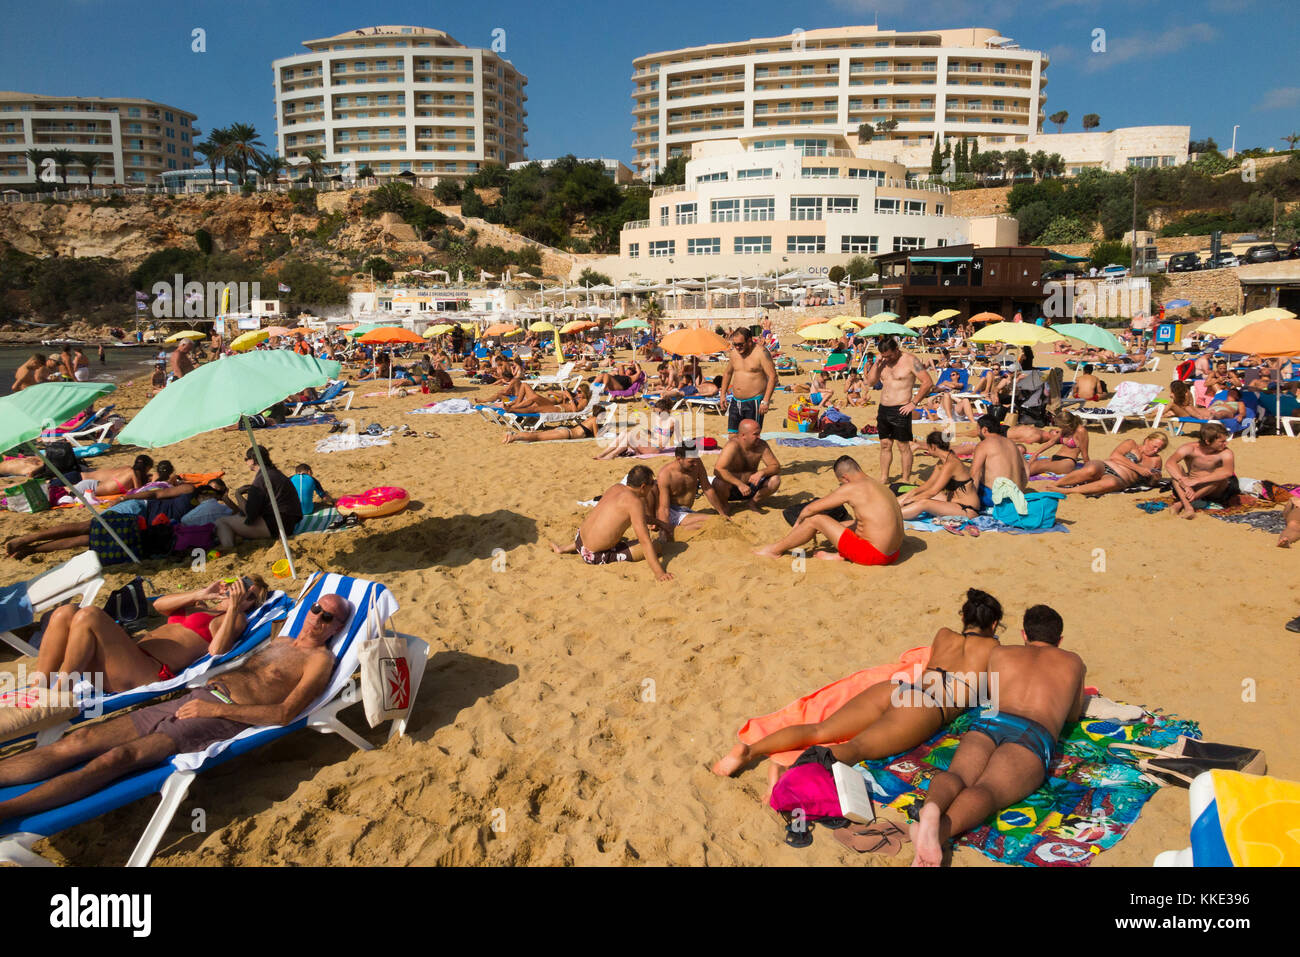 Sea & sandy beach with tourists / sunbathers people enjoying themselves swimming sun bathing overlooked by Radisson Blu Resort, Malta Golden Sands. Stock Photo